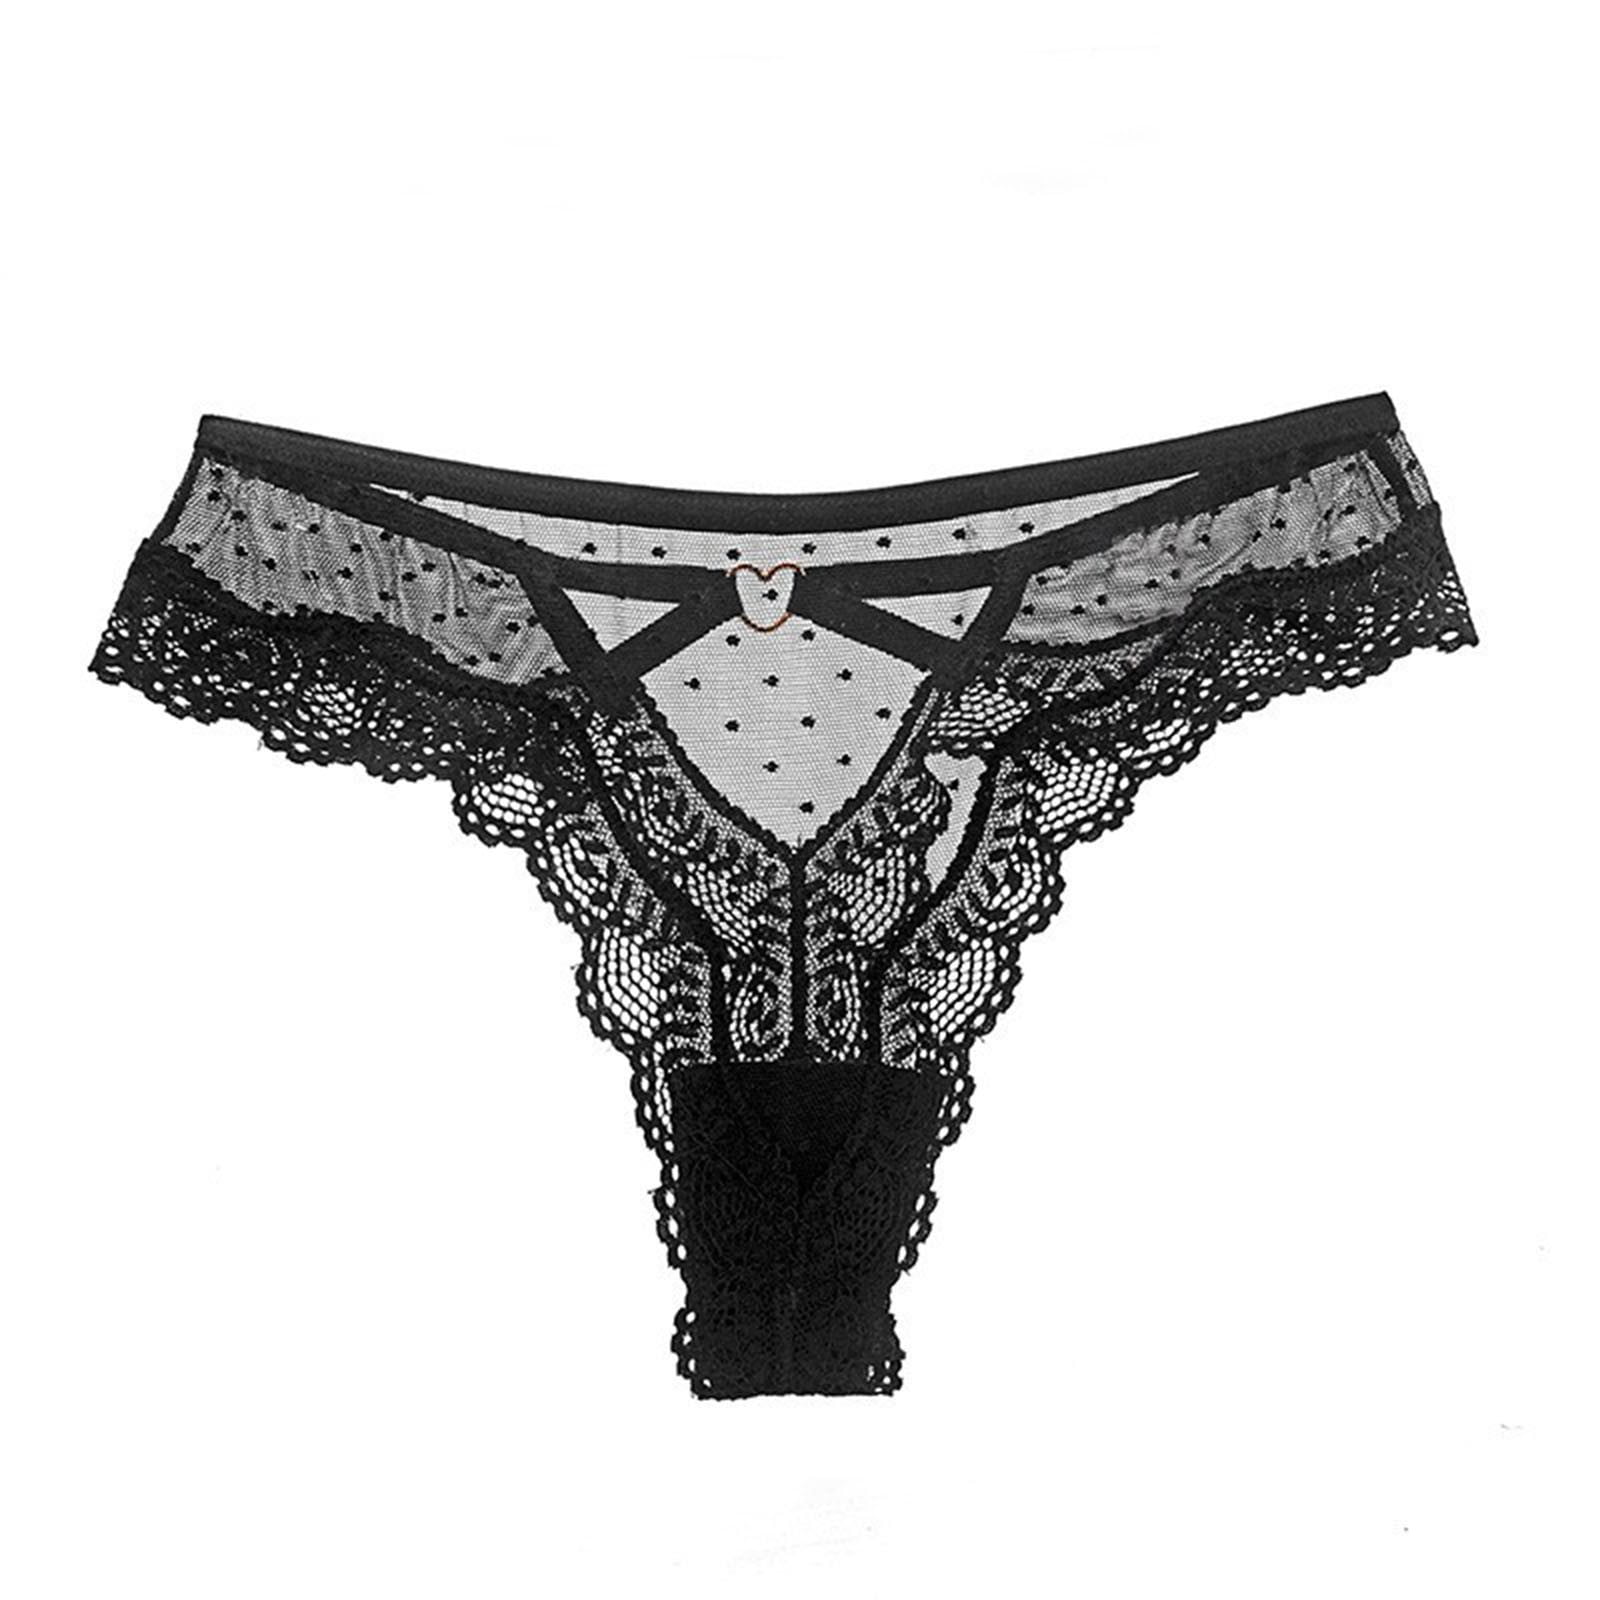 Phalin Women's Other Thongs (Pack of 1) (llshorts_21_Black_Free Size)